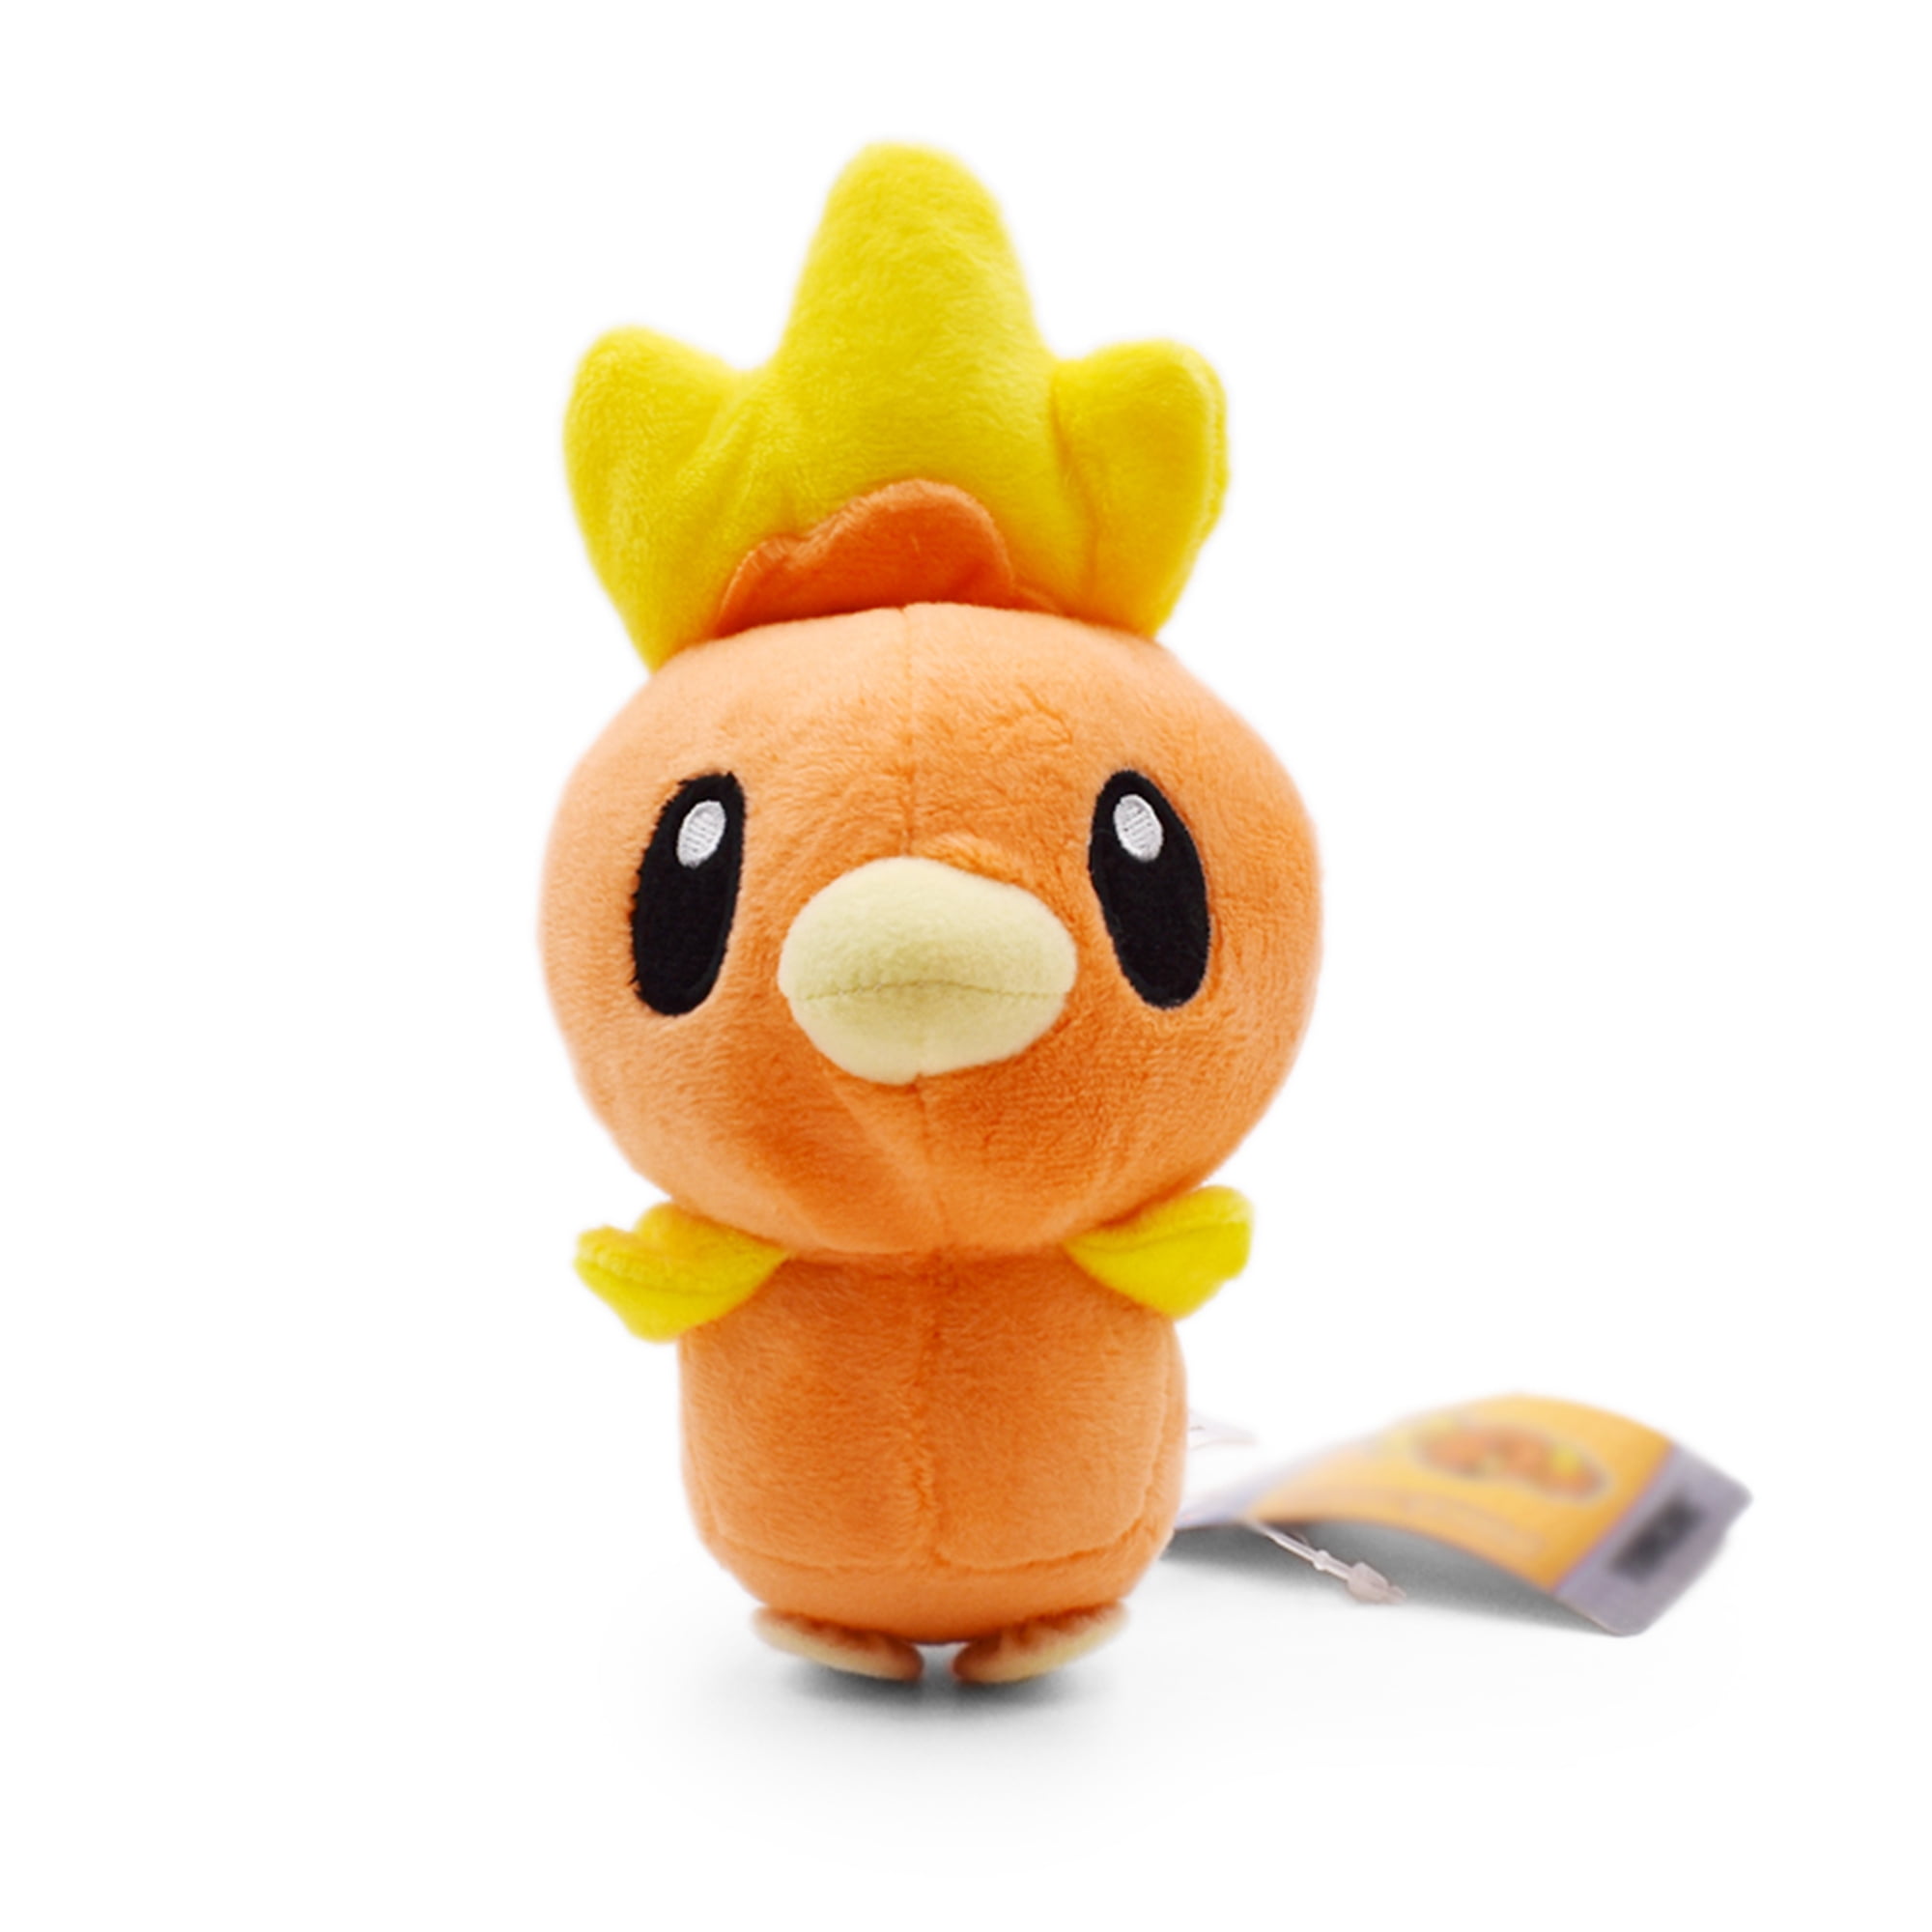 SeekFunning Pokemon Plush Toys, 7" Torchic Pok All Star Collection Stuffed Animals for Kids Gifts,Orange